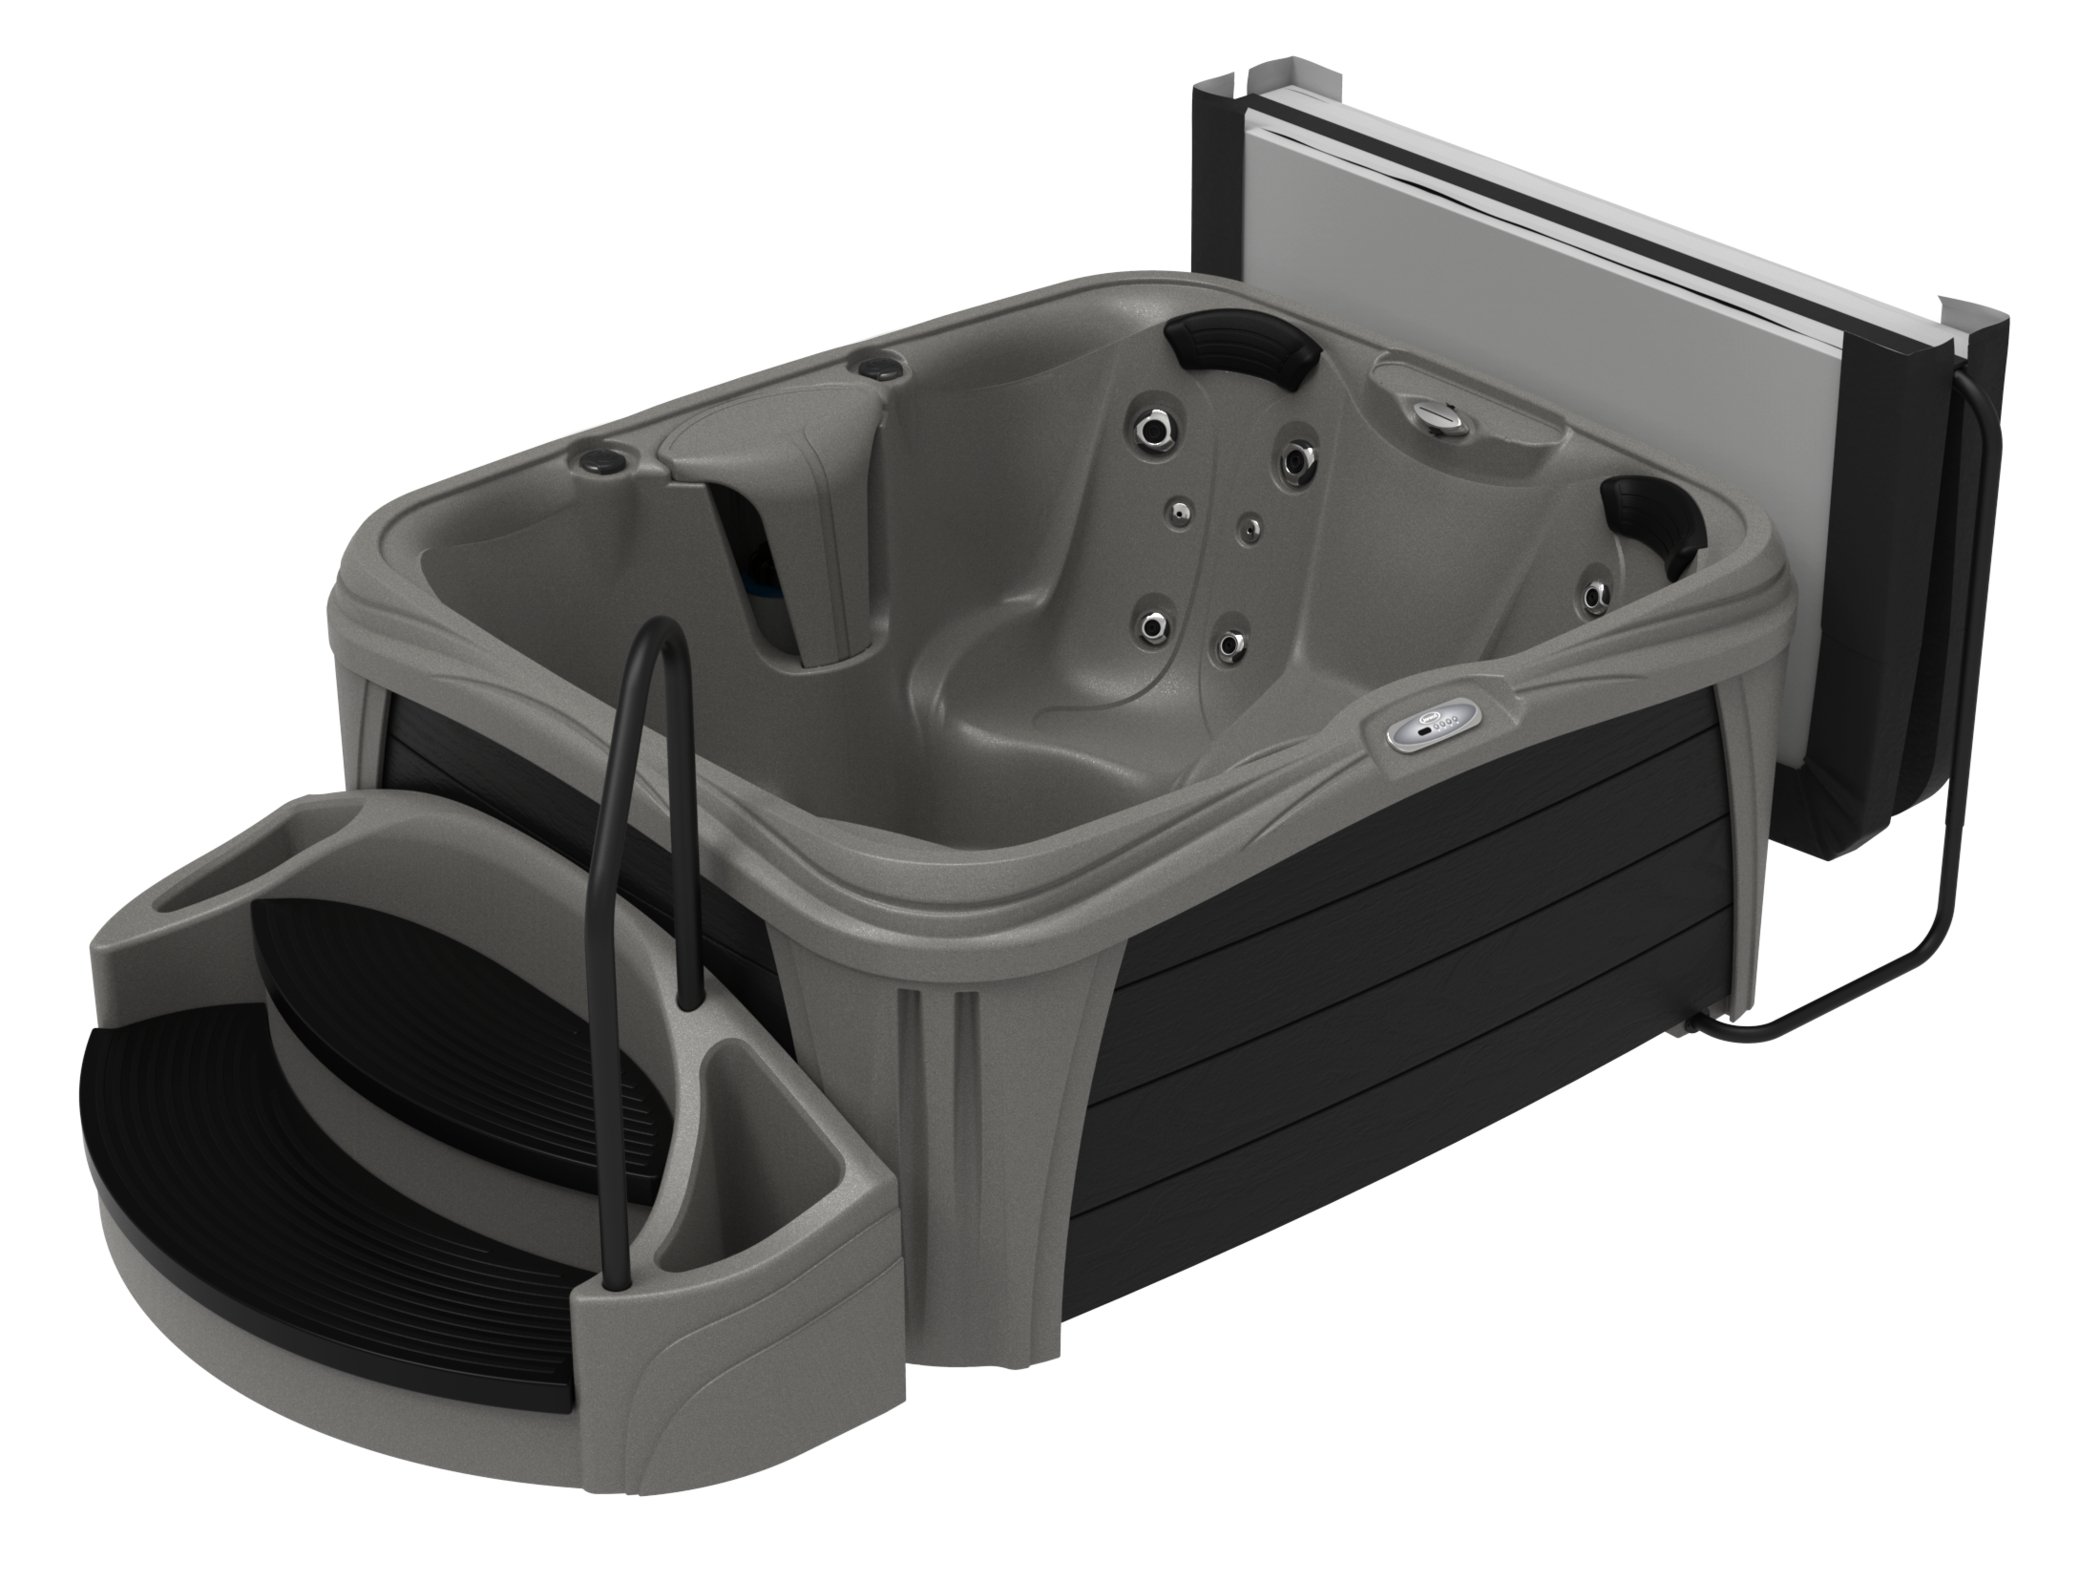 Bemiddelen Redding Raad Mood™ (Rectangle) Designer Hot Tub with Open Seating | Jacuzzi.com | Jacuzzi ®